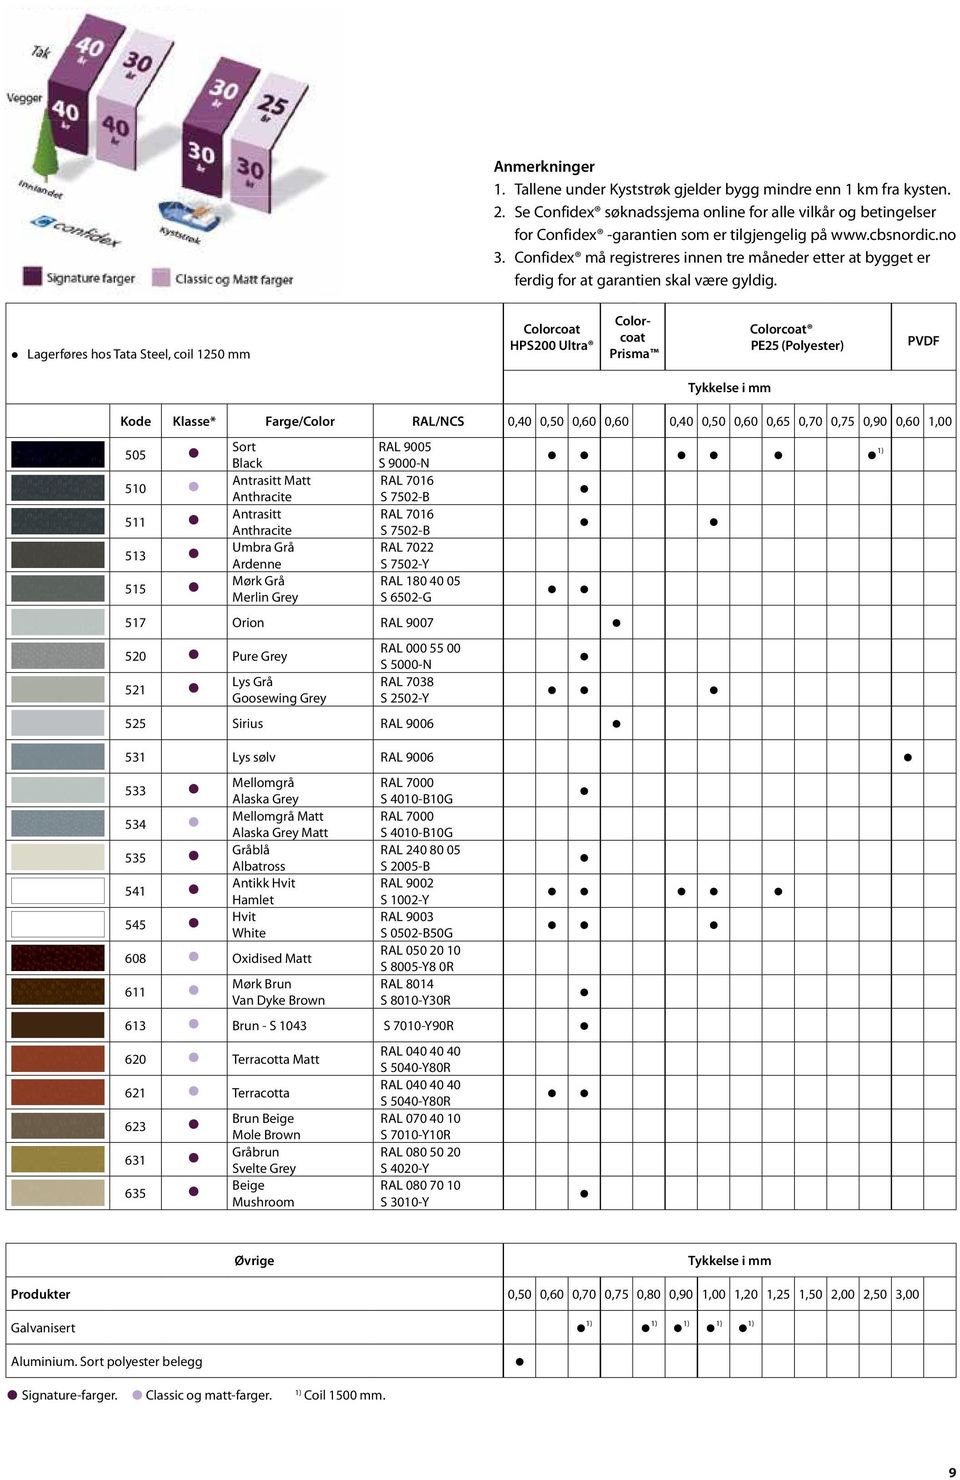 Lagerføres hos Tata Steel, coil 1250 mm Colorcoat HPS200 Ultra Colorcoat Prisma Colorcoat PE25 (Polyester) PVDF Tykkelse i mm Kode Klasse* Farge/Color RAL/NCS 0,40 0,50 0,60 0,60 0,40 0,50 0,60 0,65